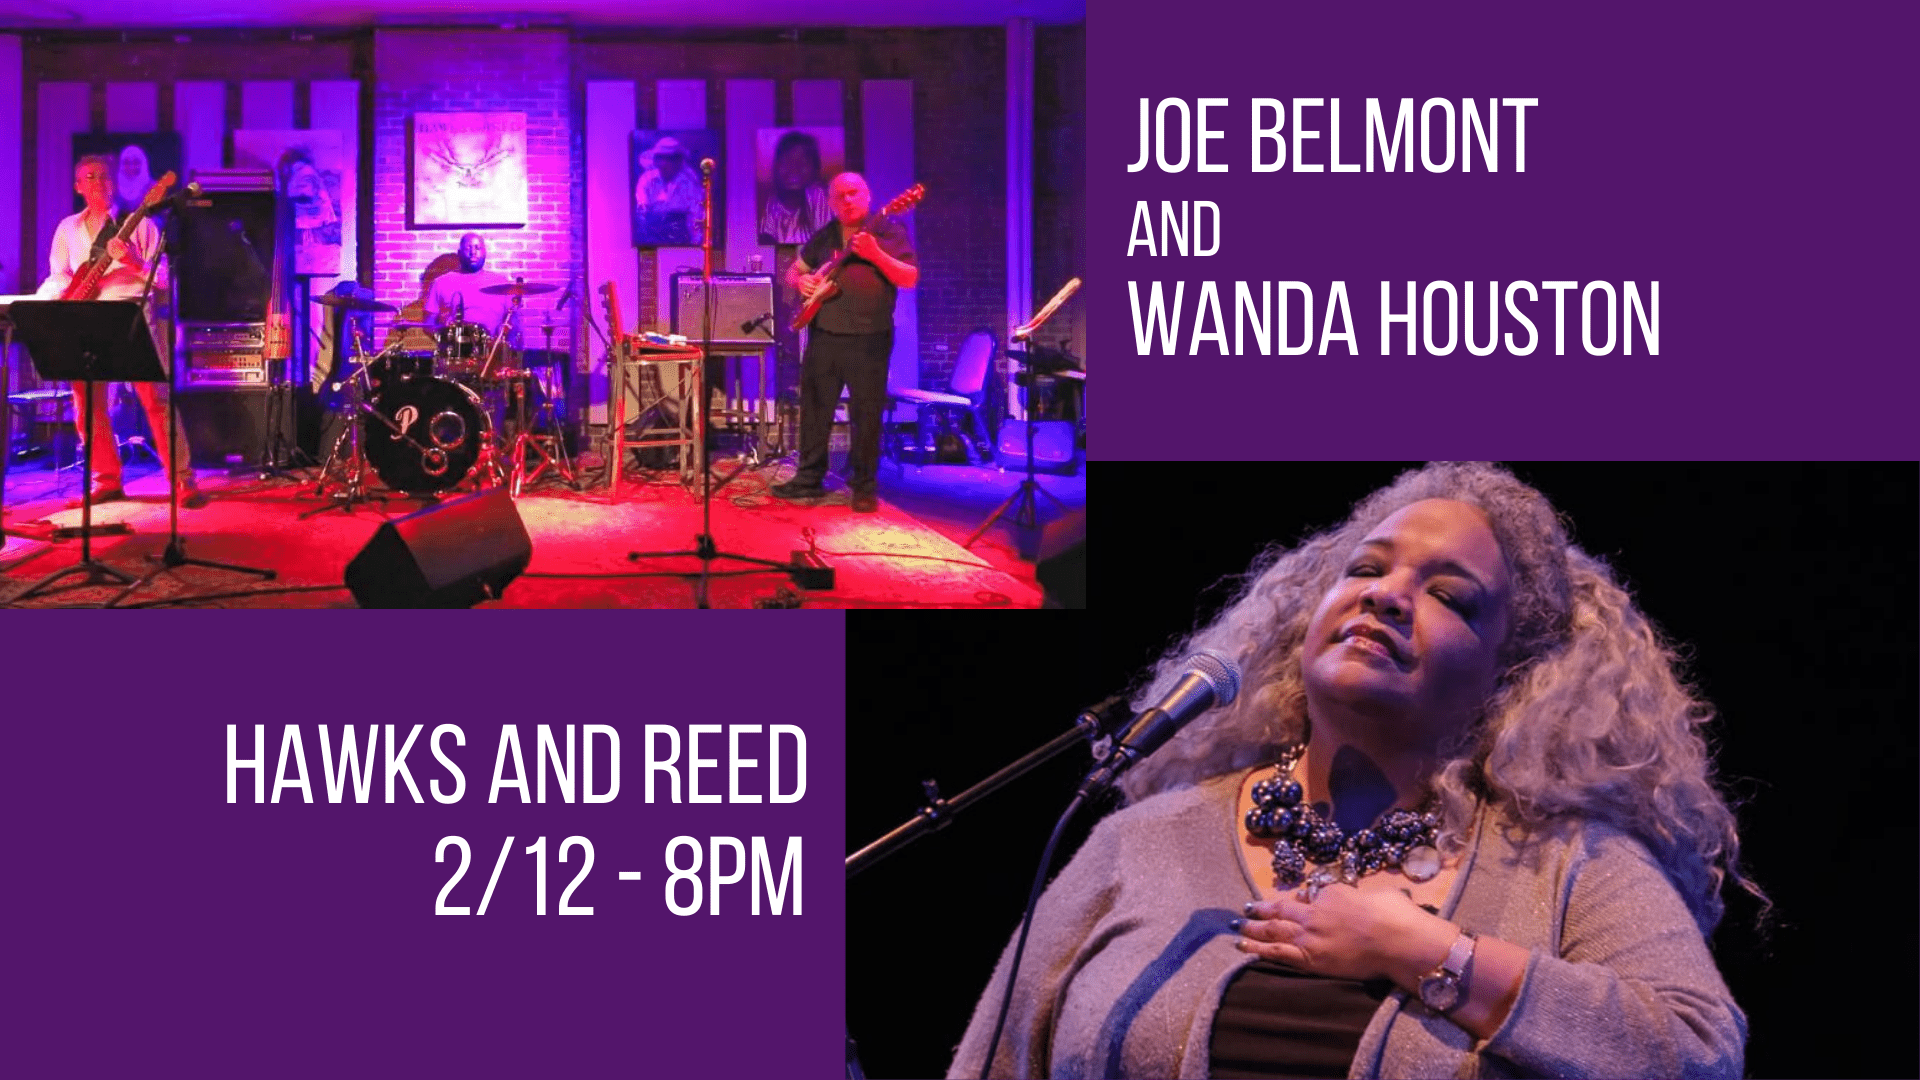 Joe Belmont and Wanda Houston at Hawks and Reed